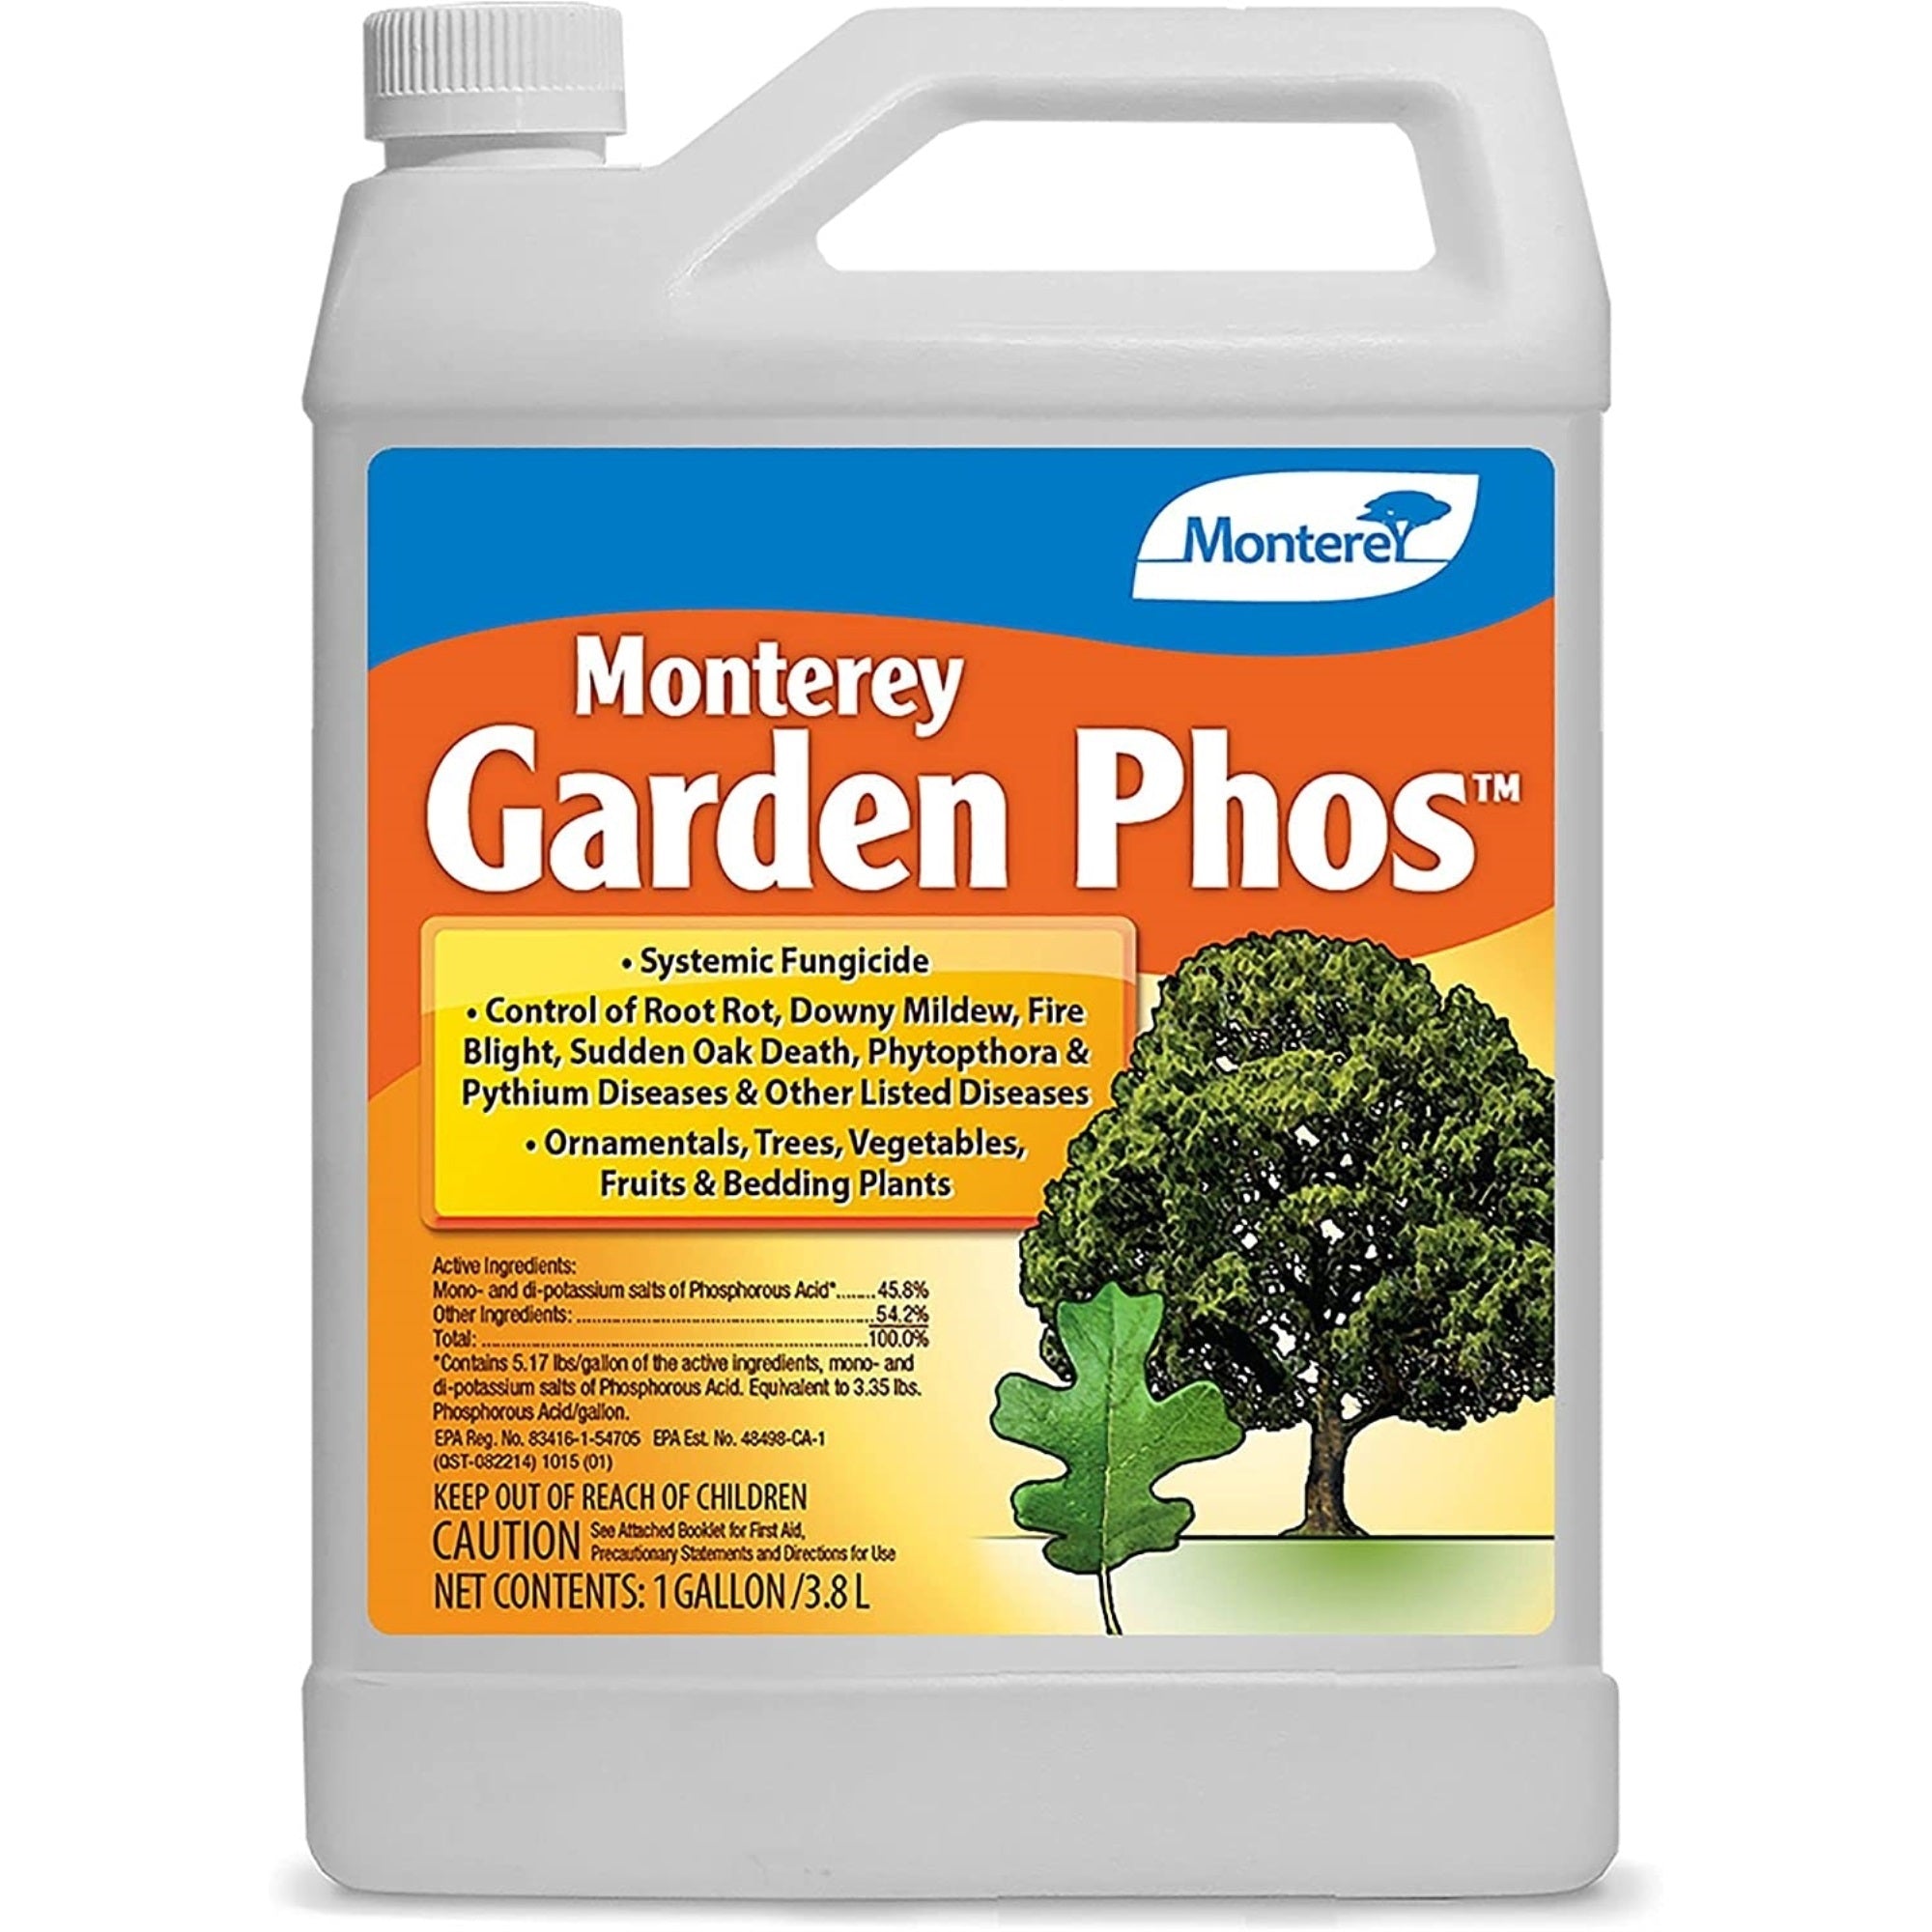 Monterey Lawn and Garden Phos Plant Fungicide, 1 Gallon